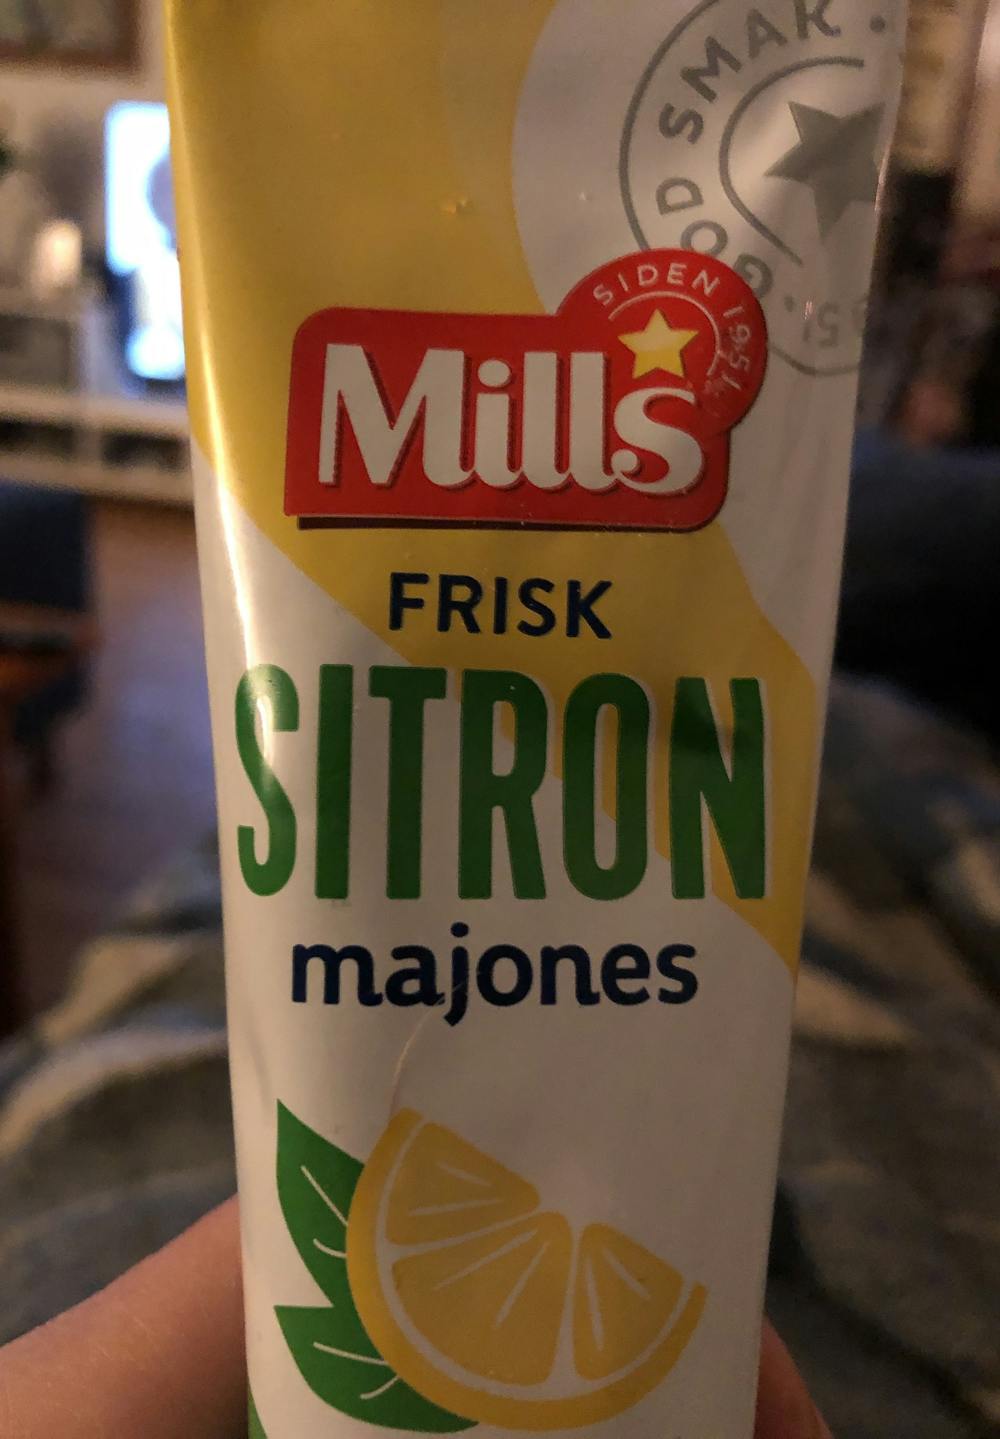 Frisk sitronmajones, Mills